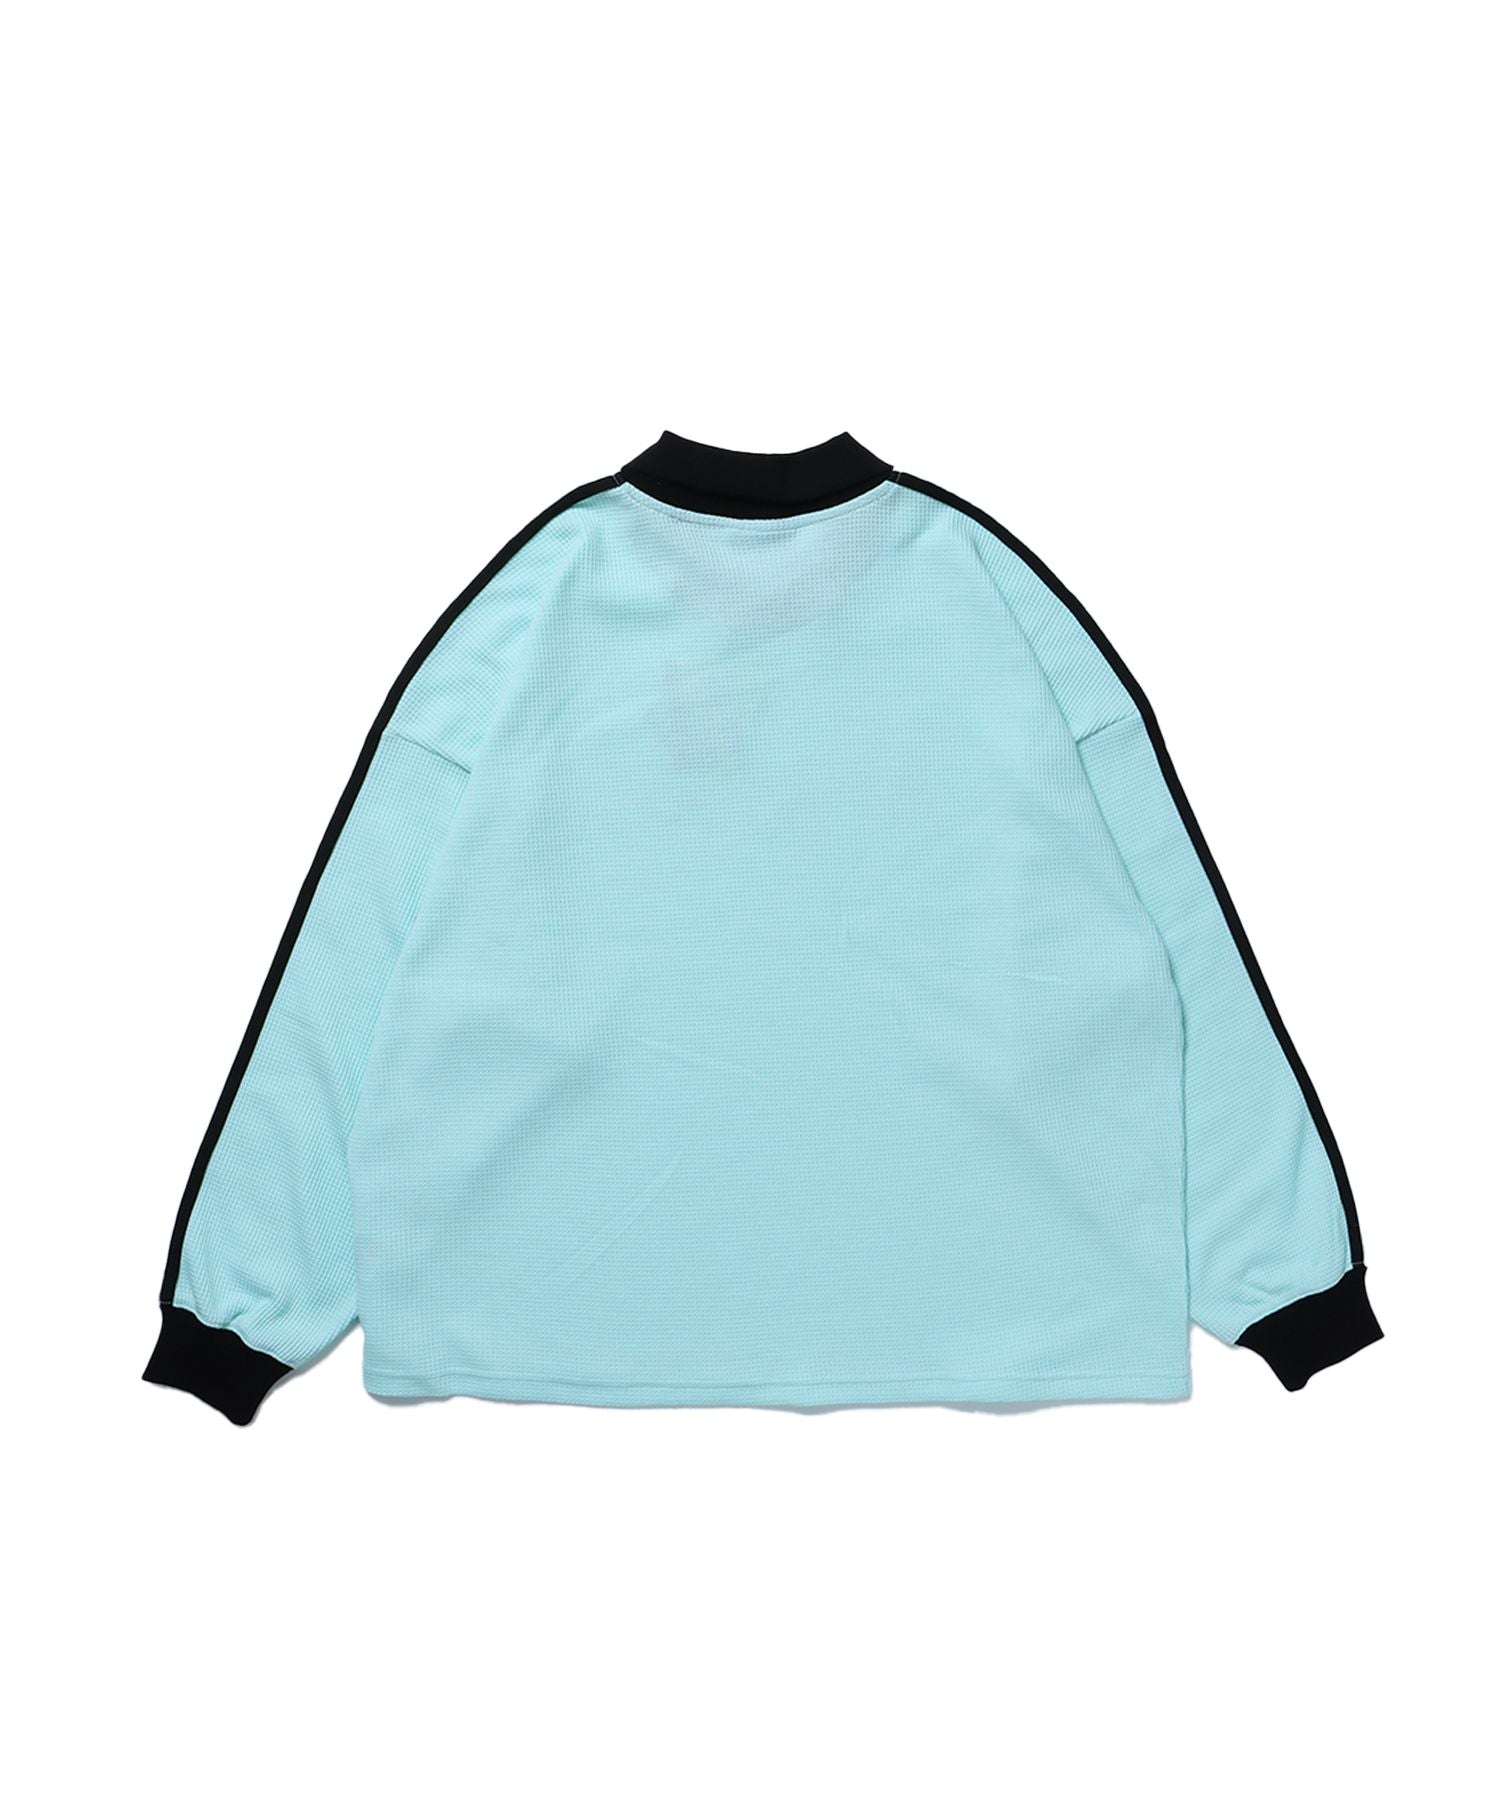 【SEQUENZ】 配色 オーバーサイズ ゲームシャツ サイドライン ターコイズブルー